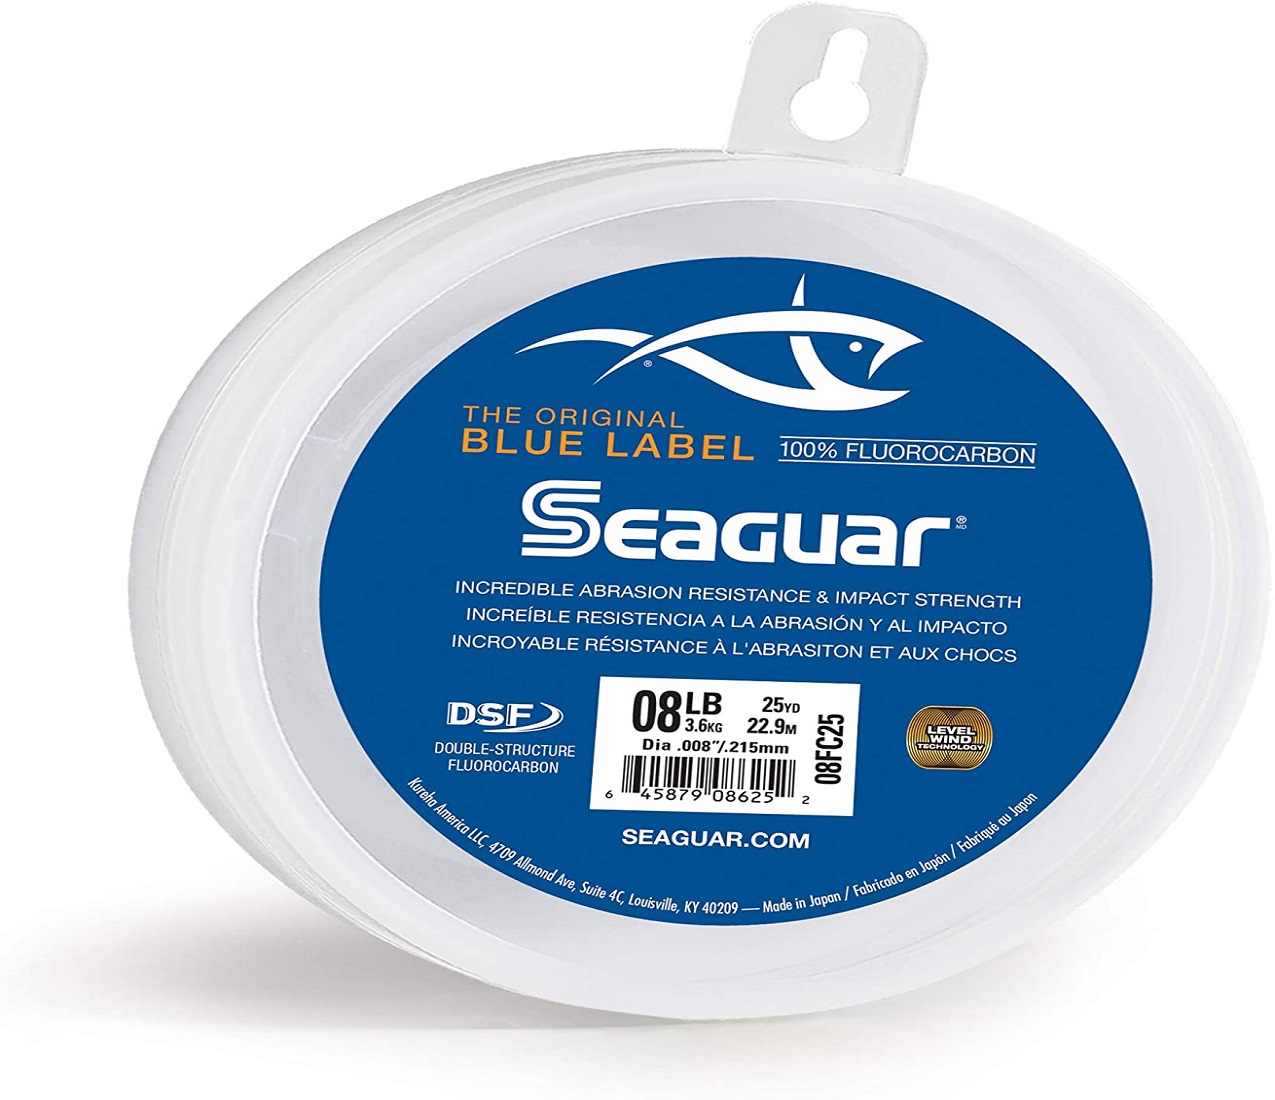 Seaguar Blue Label Fluorocarbon Leader Fishing Line 1